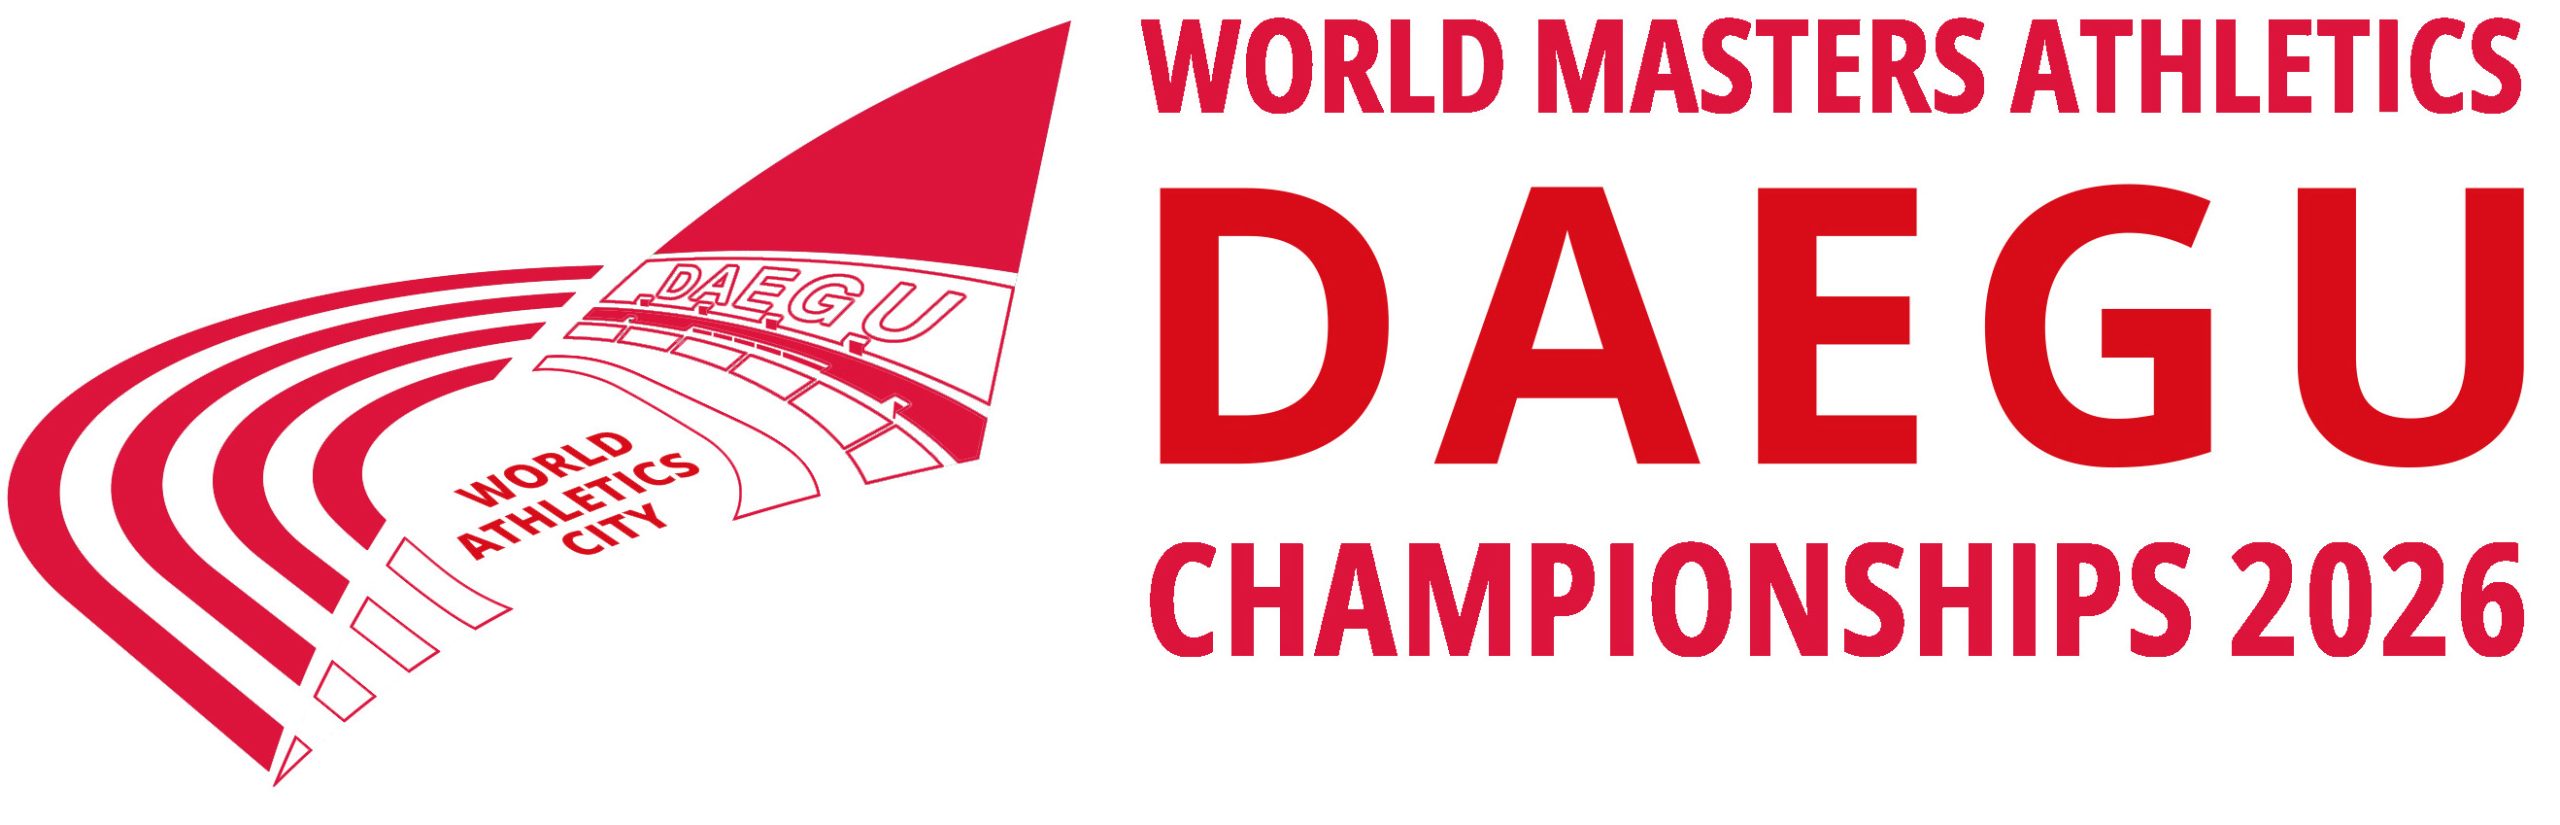 2026 World Masters Athletics Stadia Championships